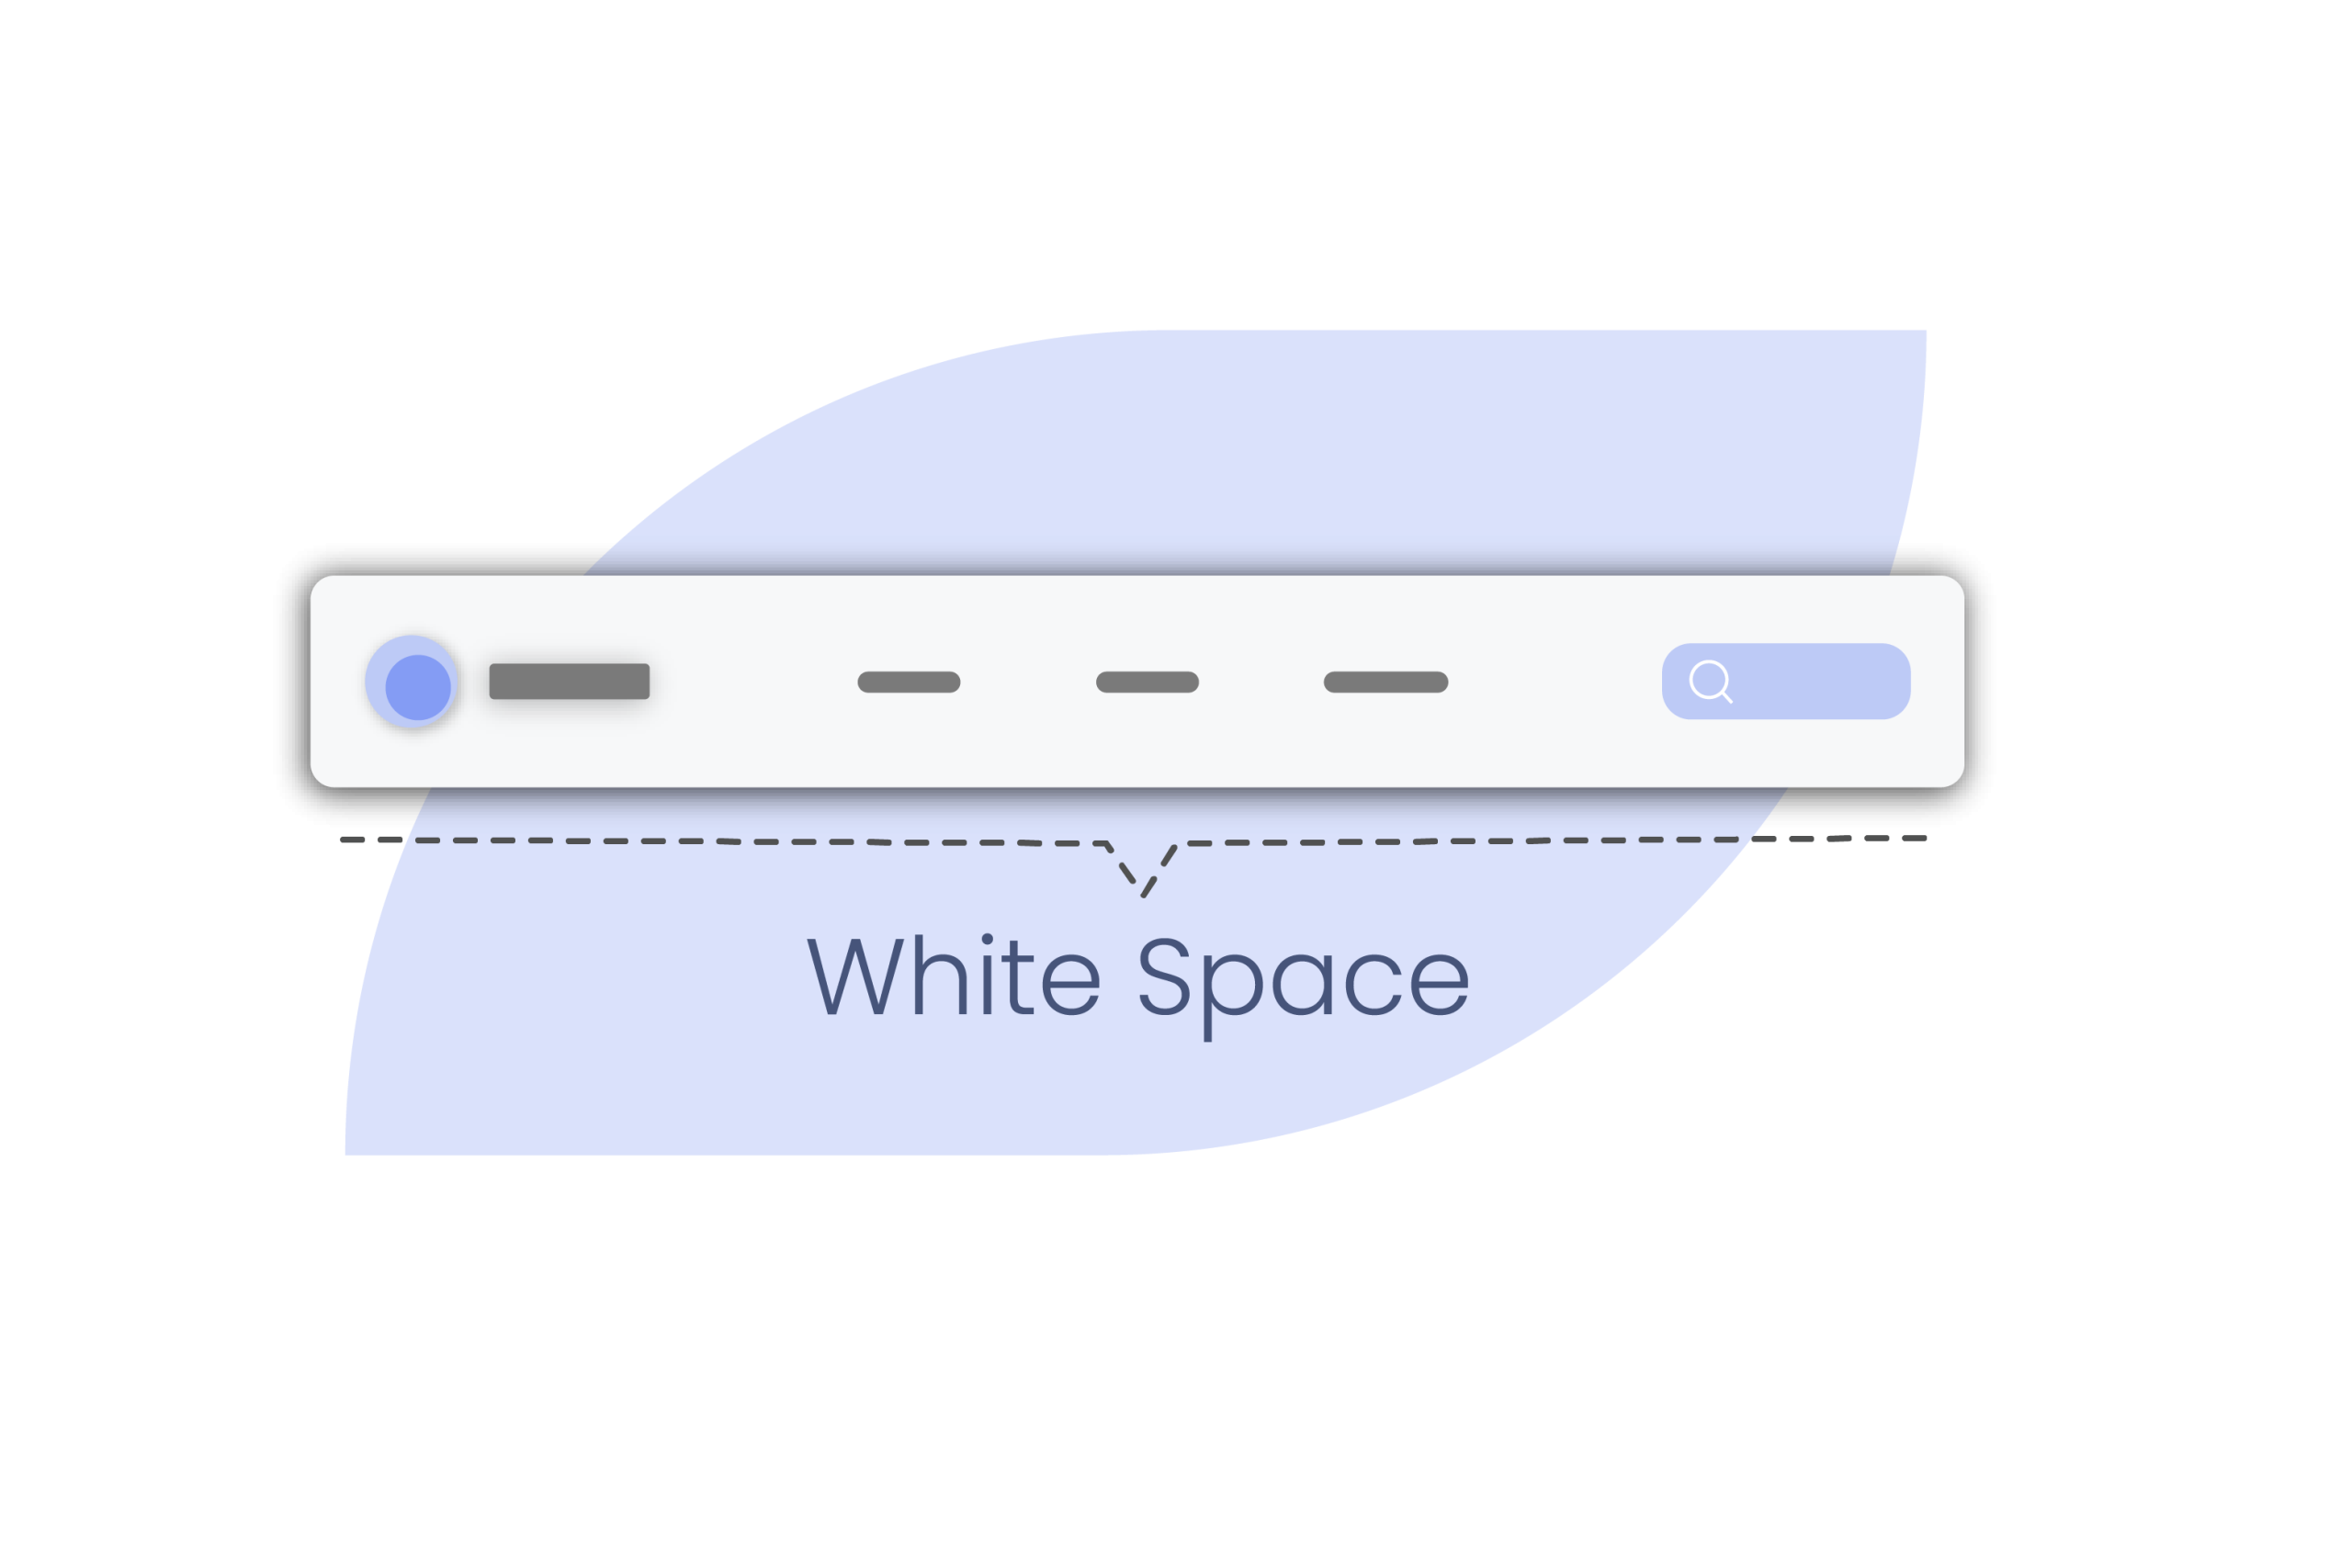 white space makes reading easy